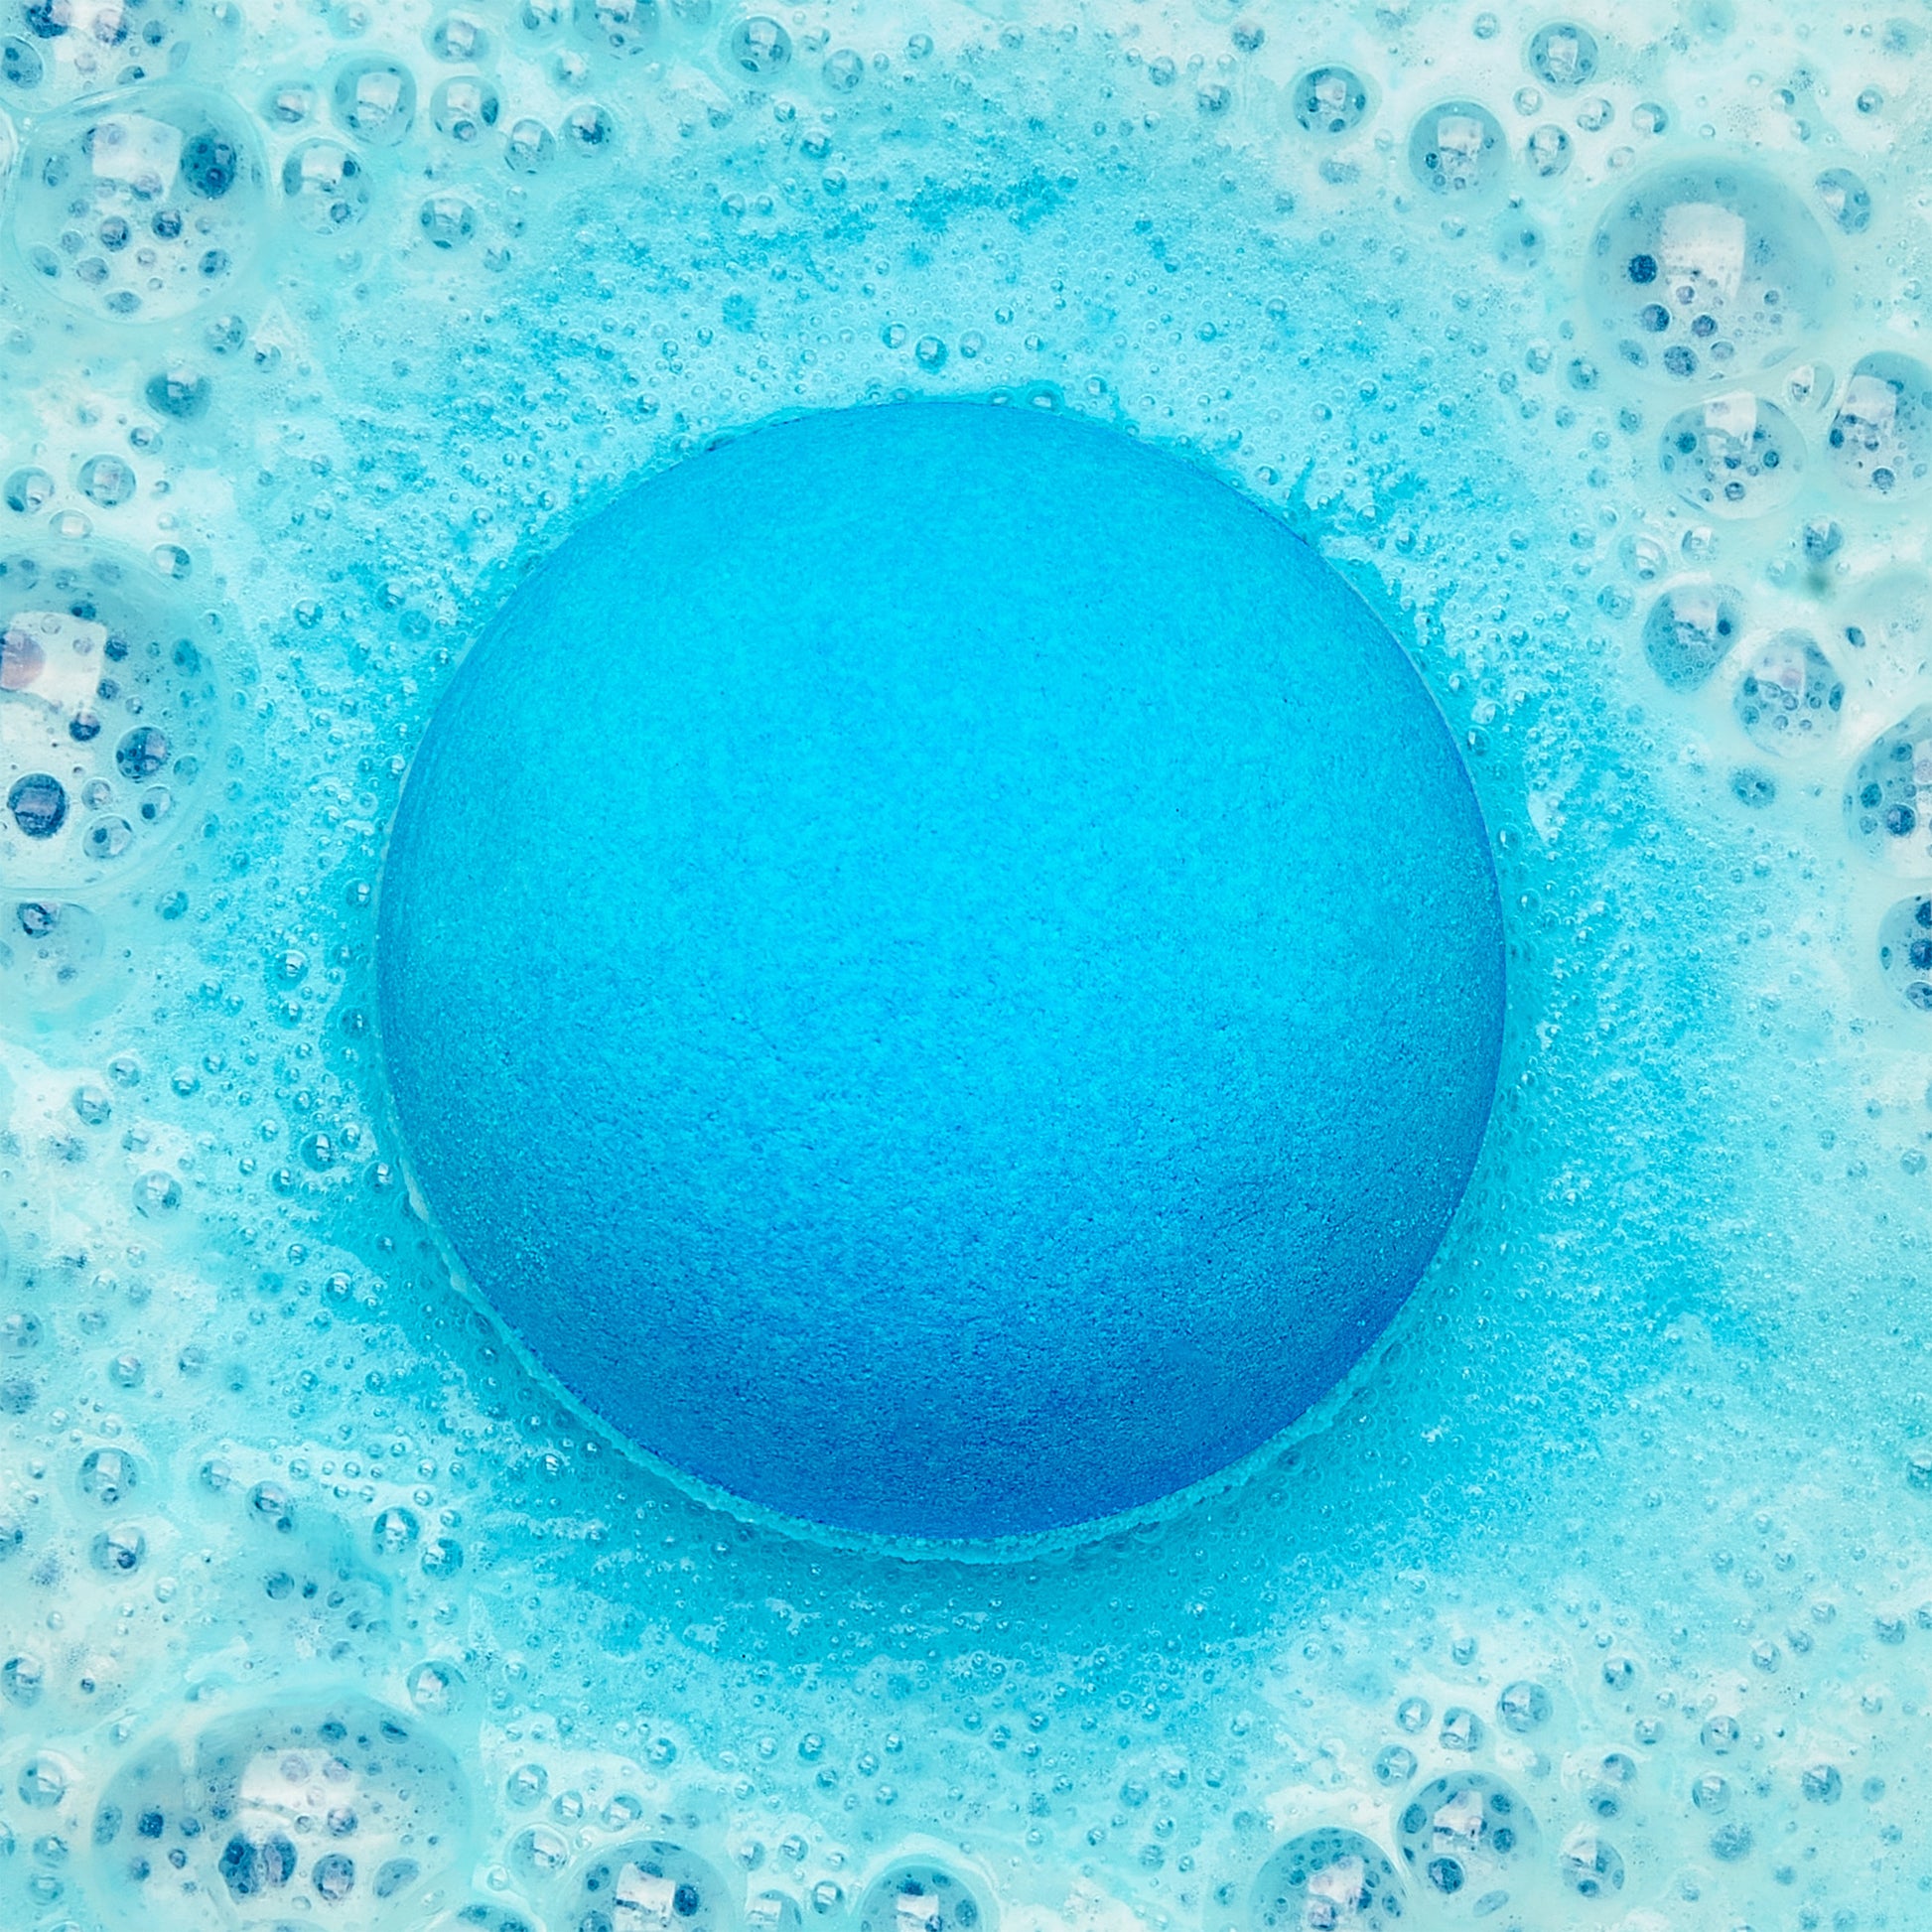 a blue fizzing bath bomb in blue bubbly water